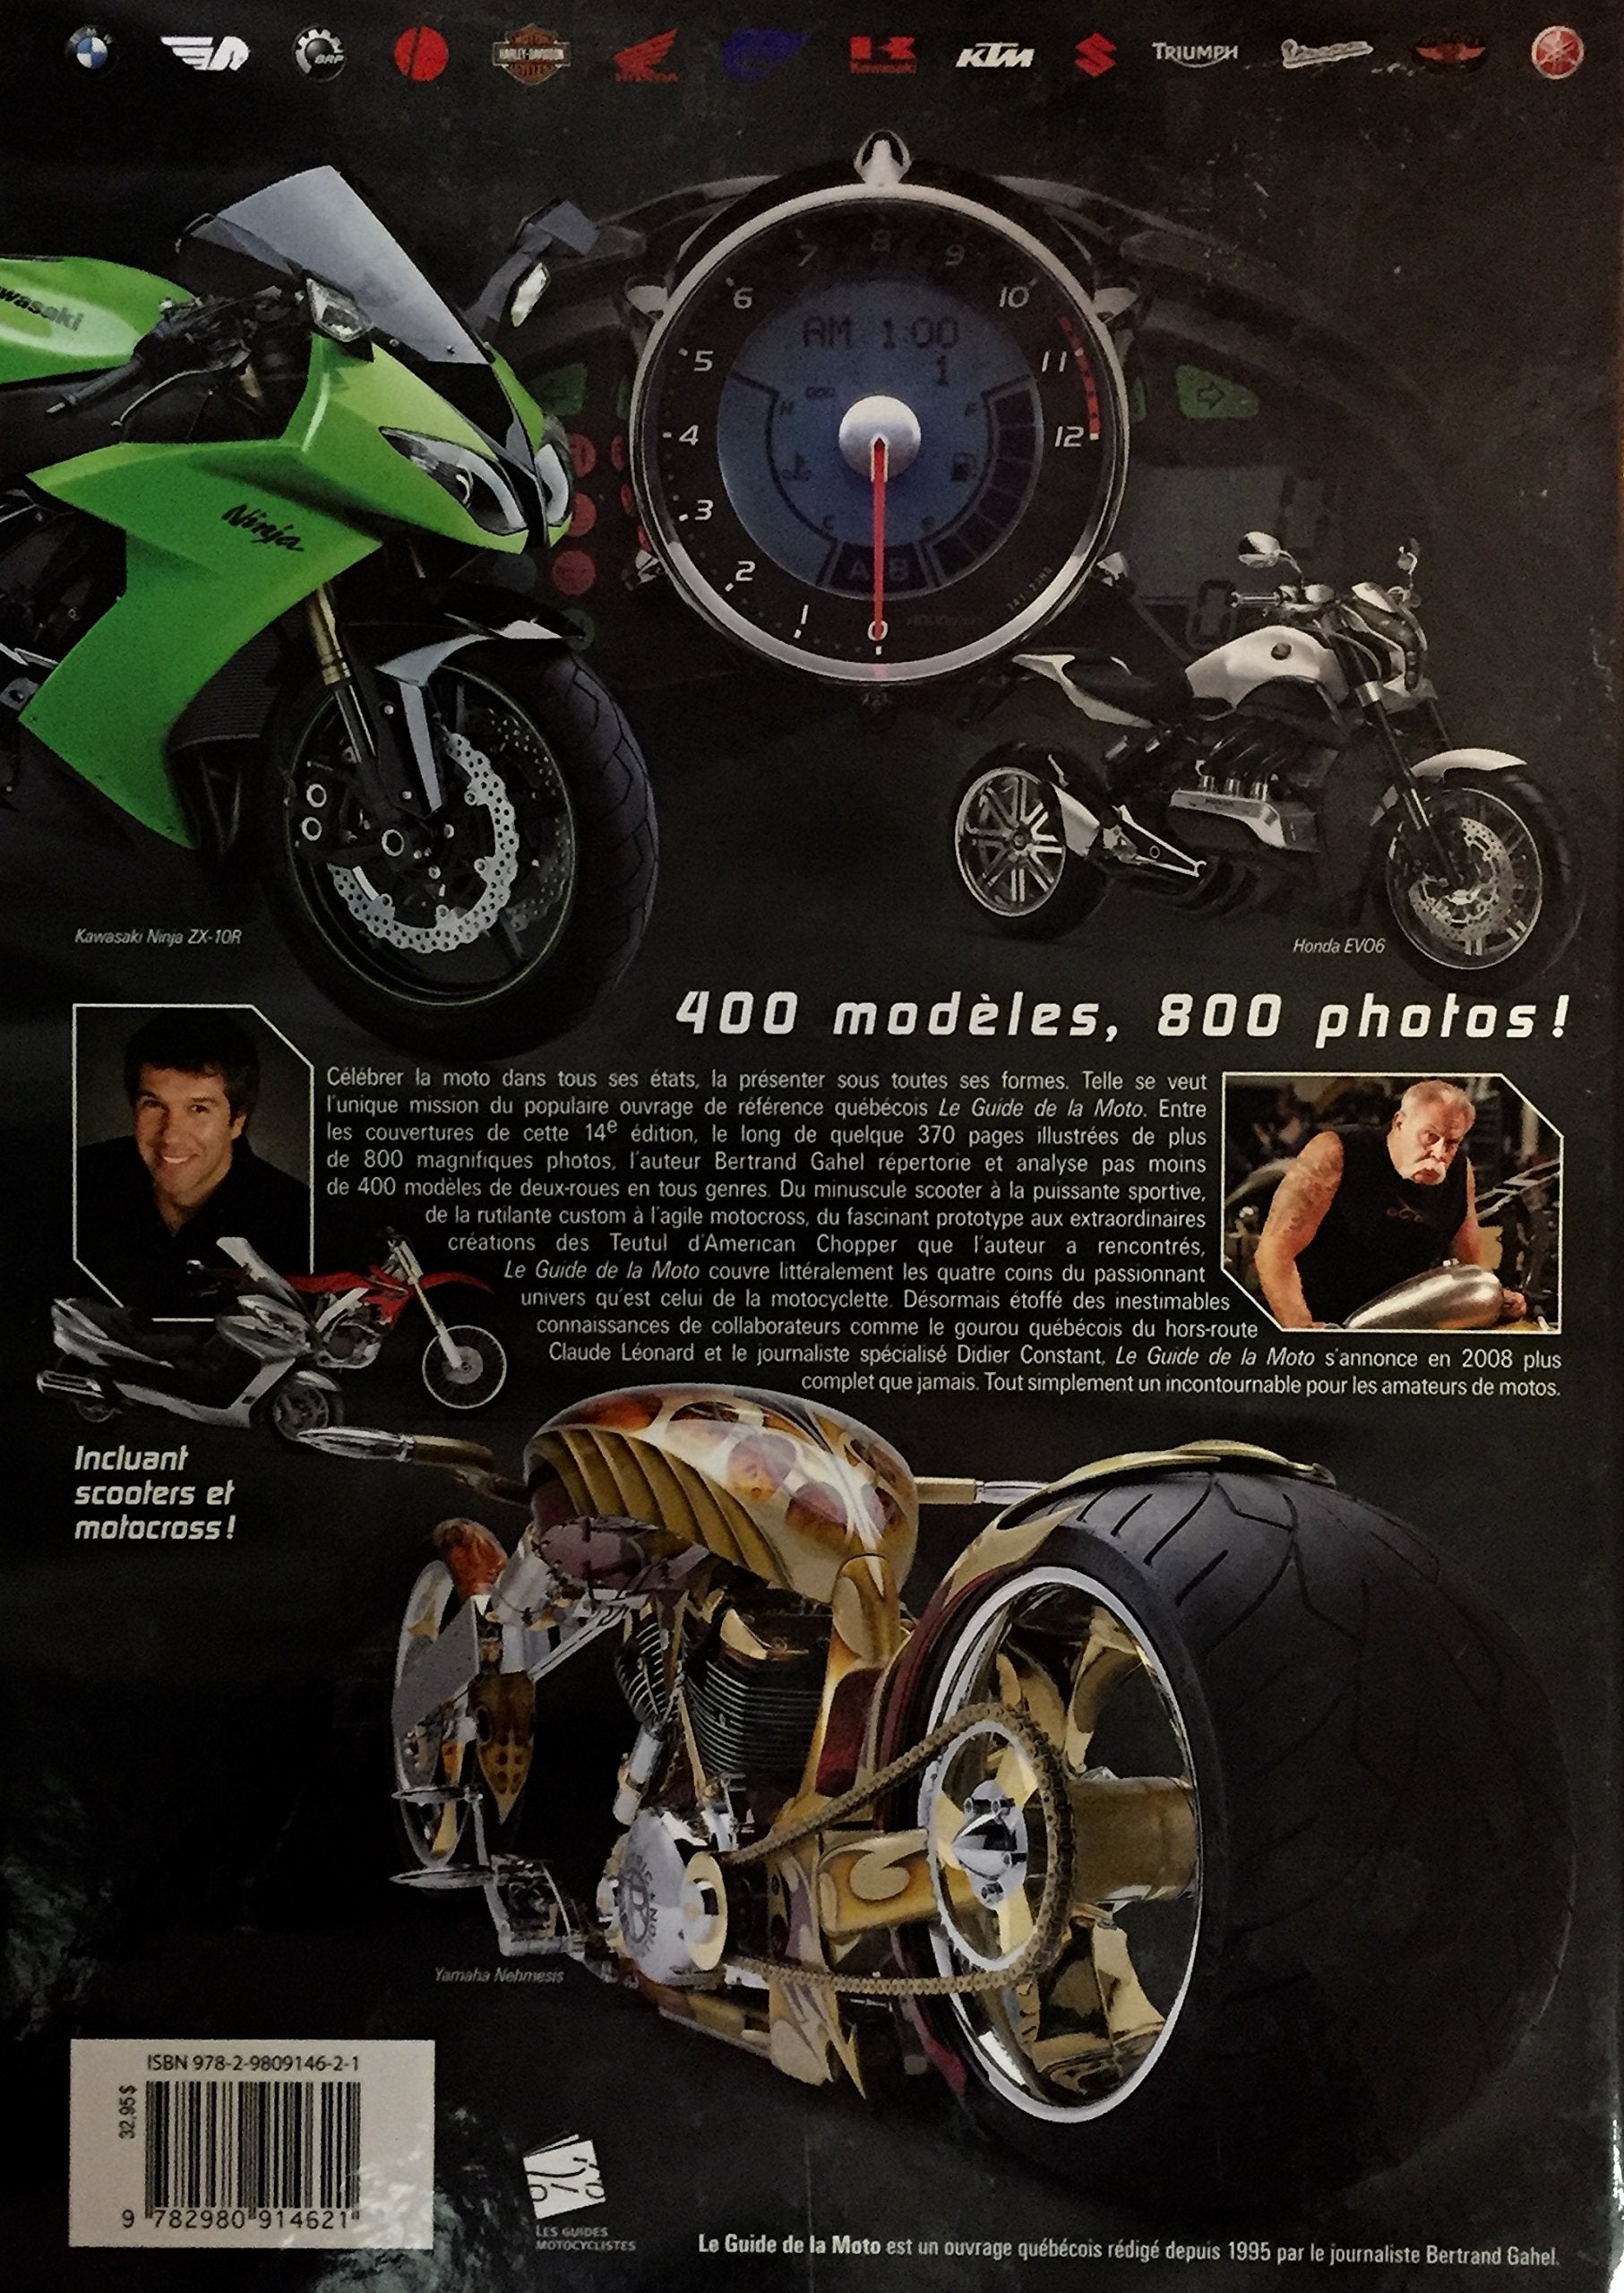 Le guide de la moto 2008 (Bertrand Gahel)